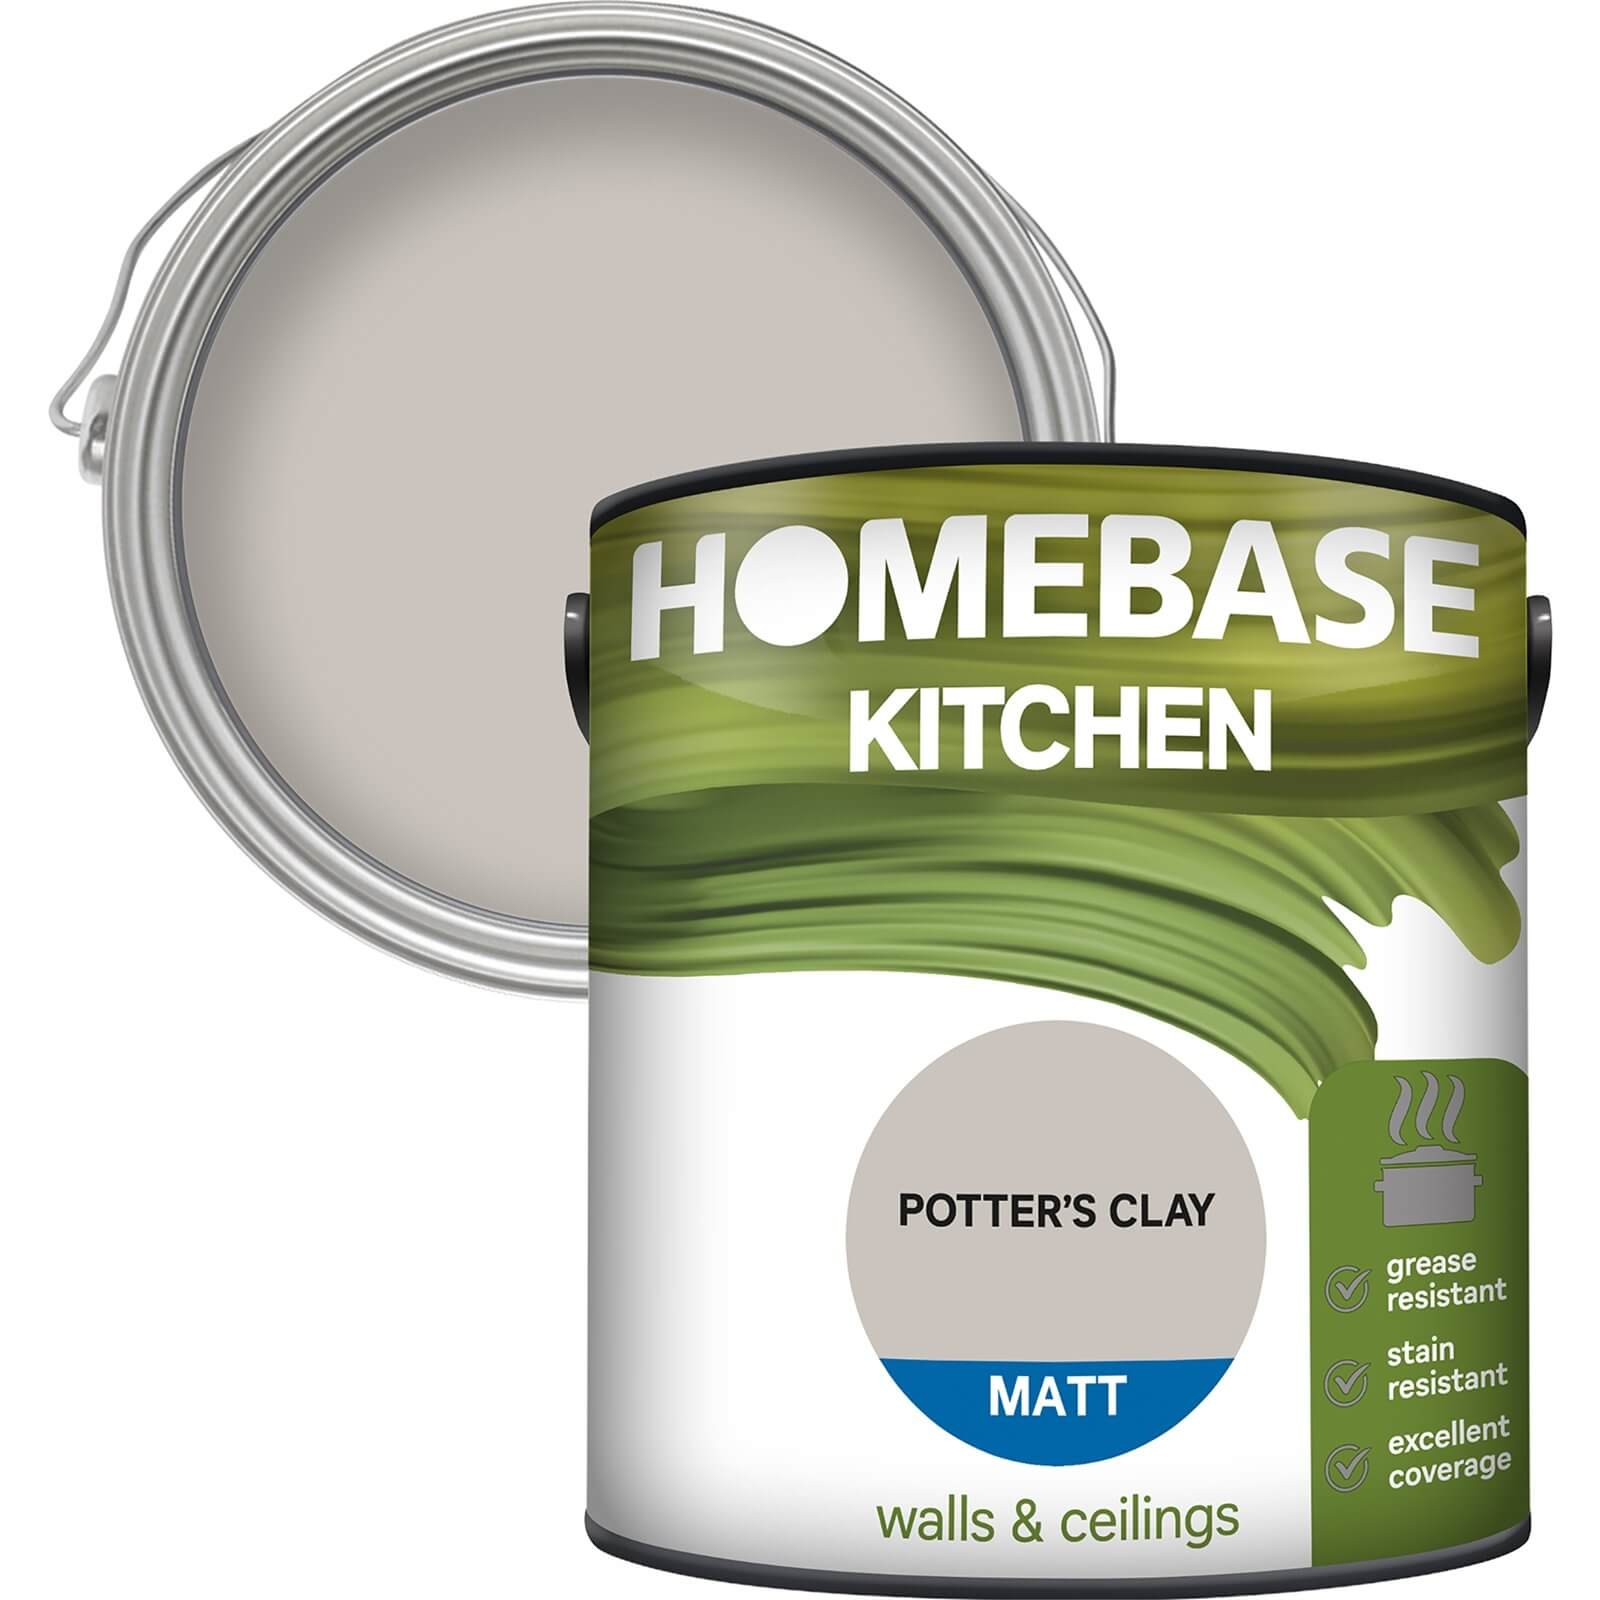 Homebase Kitchen Matt Paint - Potters Clay 2.5L